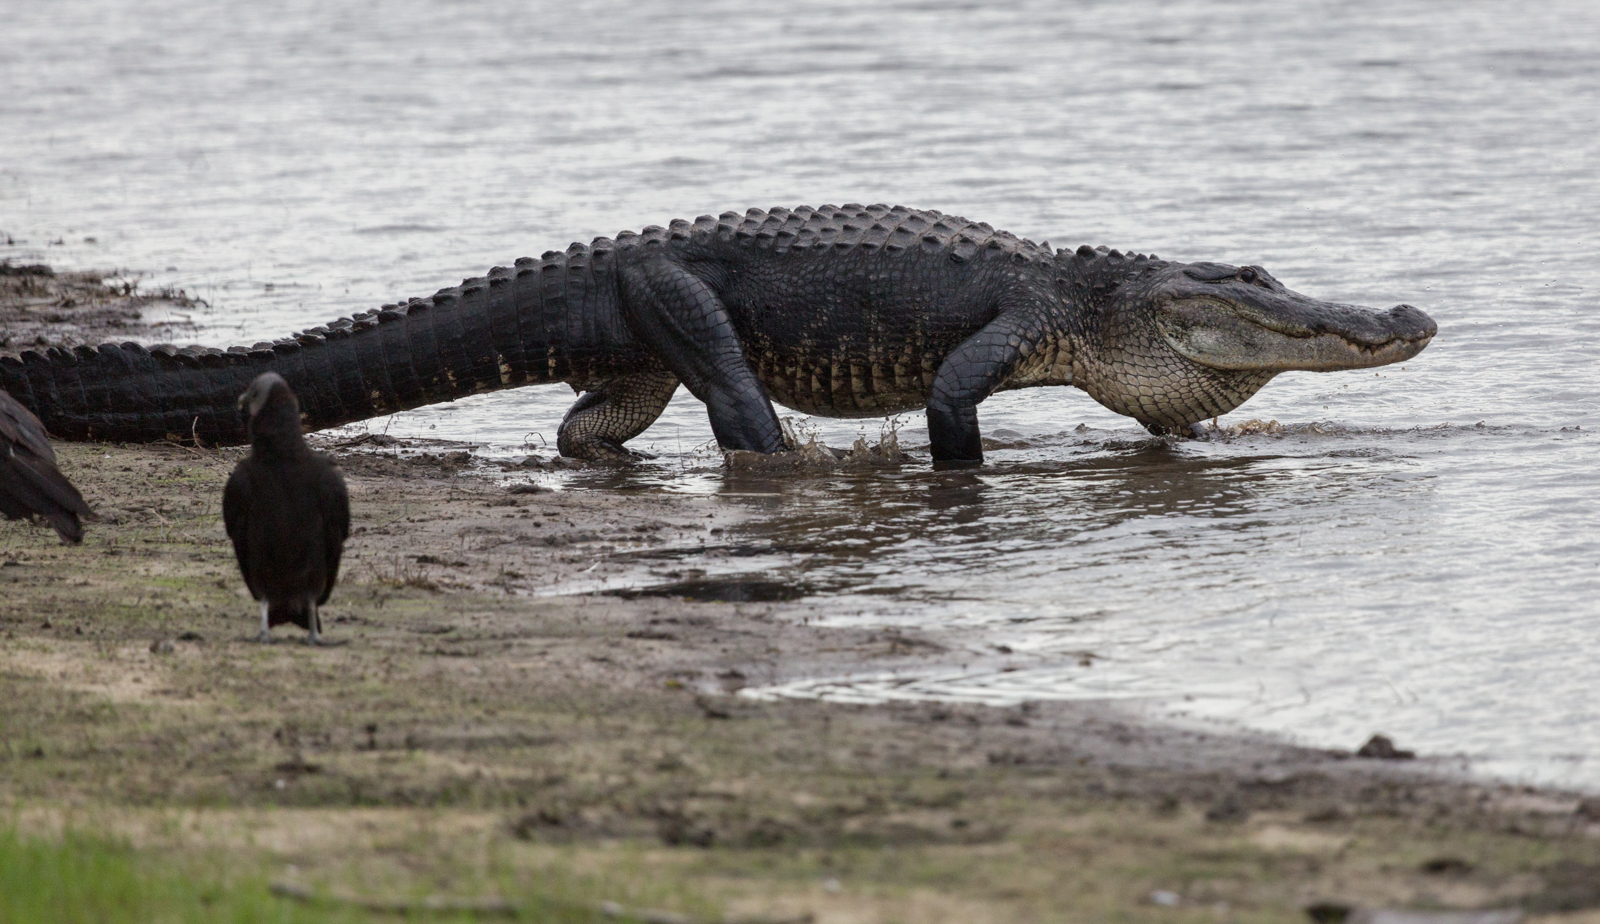 Big Gator Entering River, Myakka River State Park, Sarasota, Florida